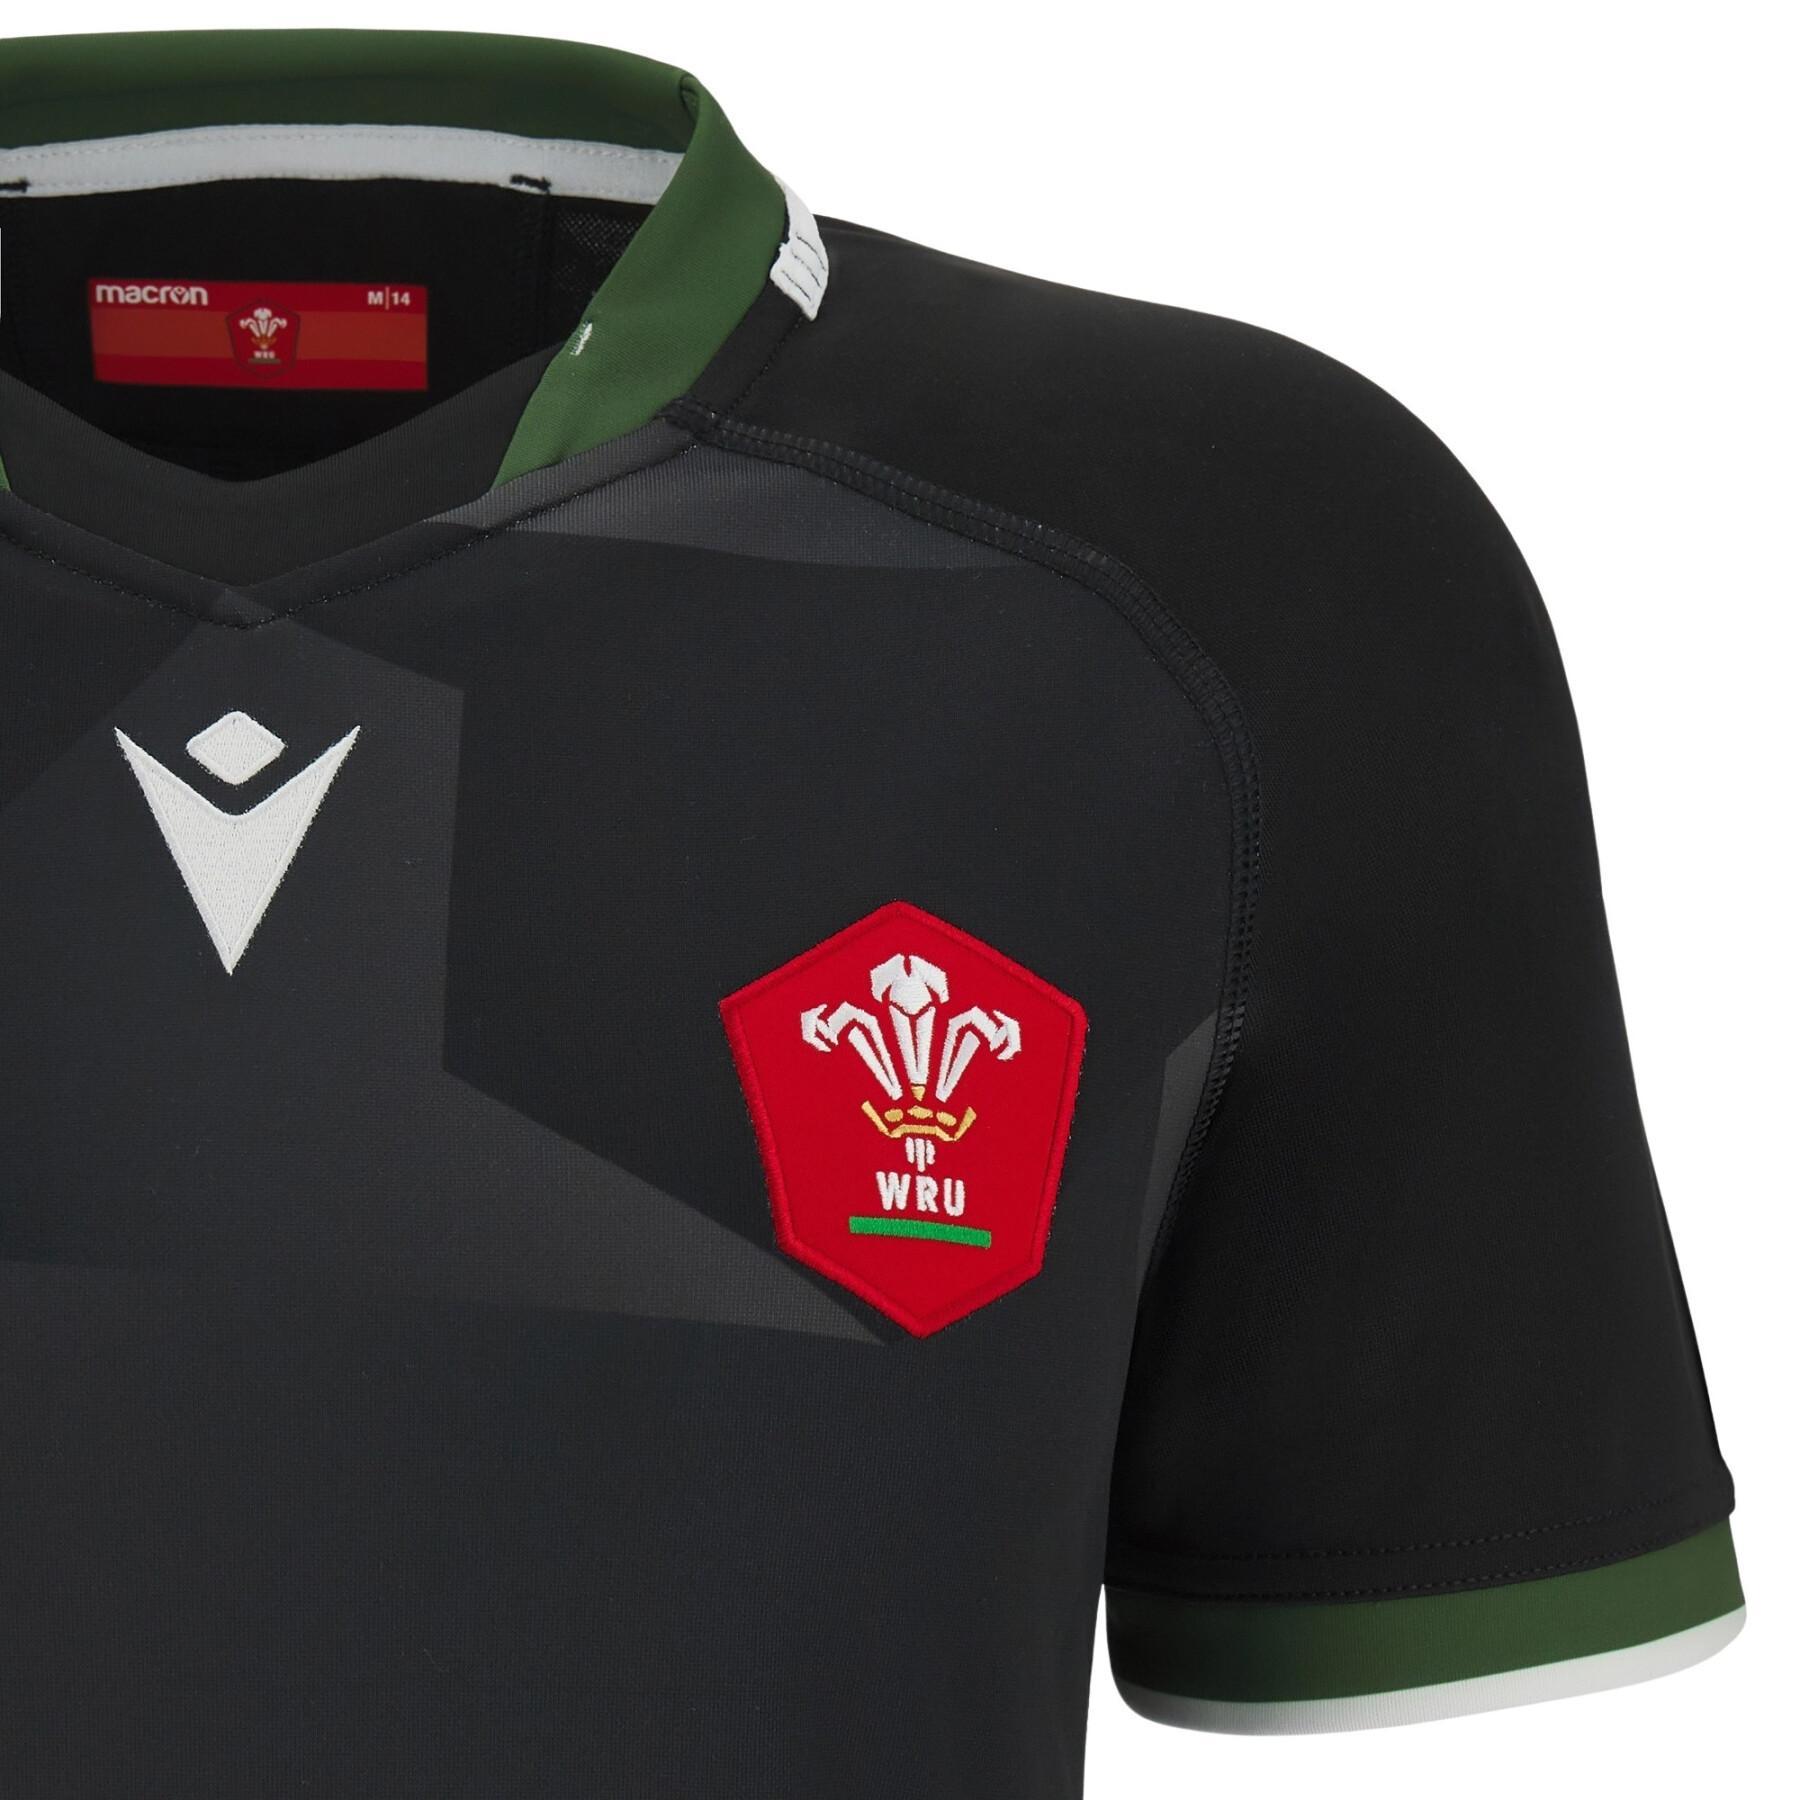 Maglia Away da donna Galles Rugby XV RWC 2023